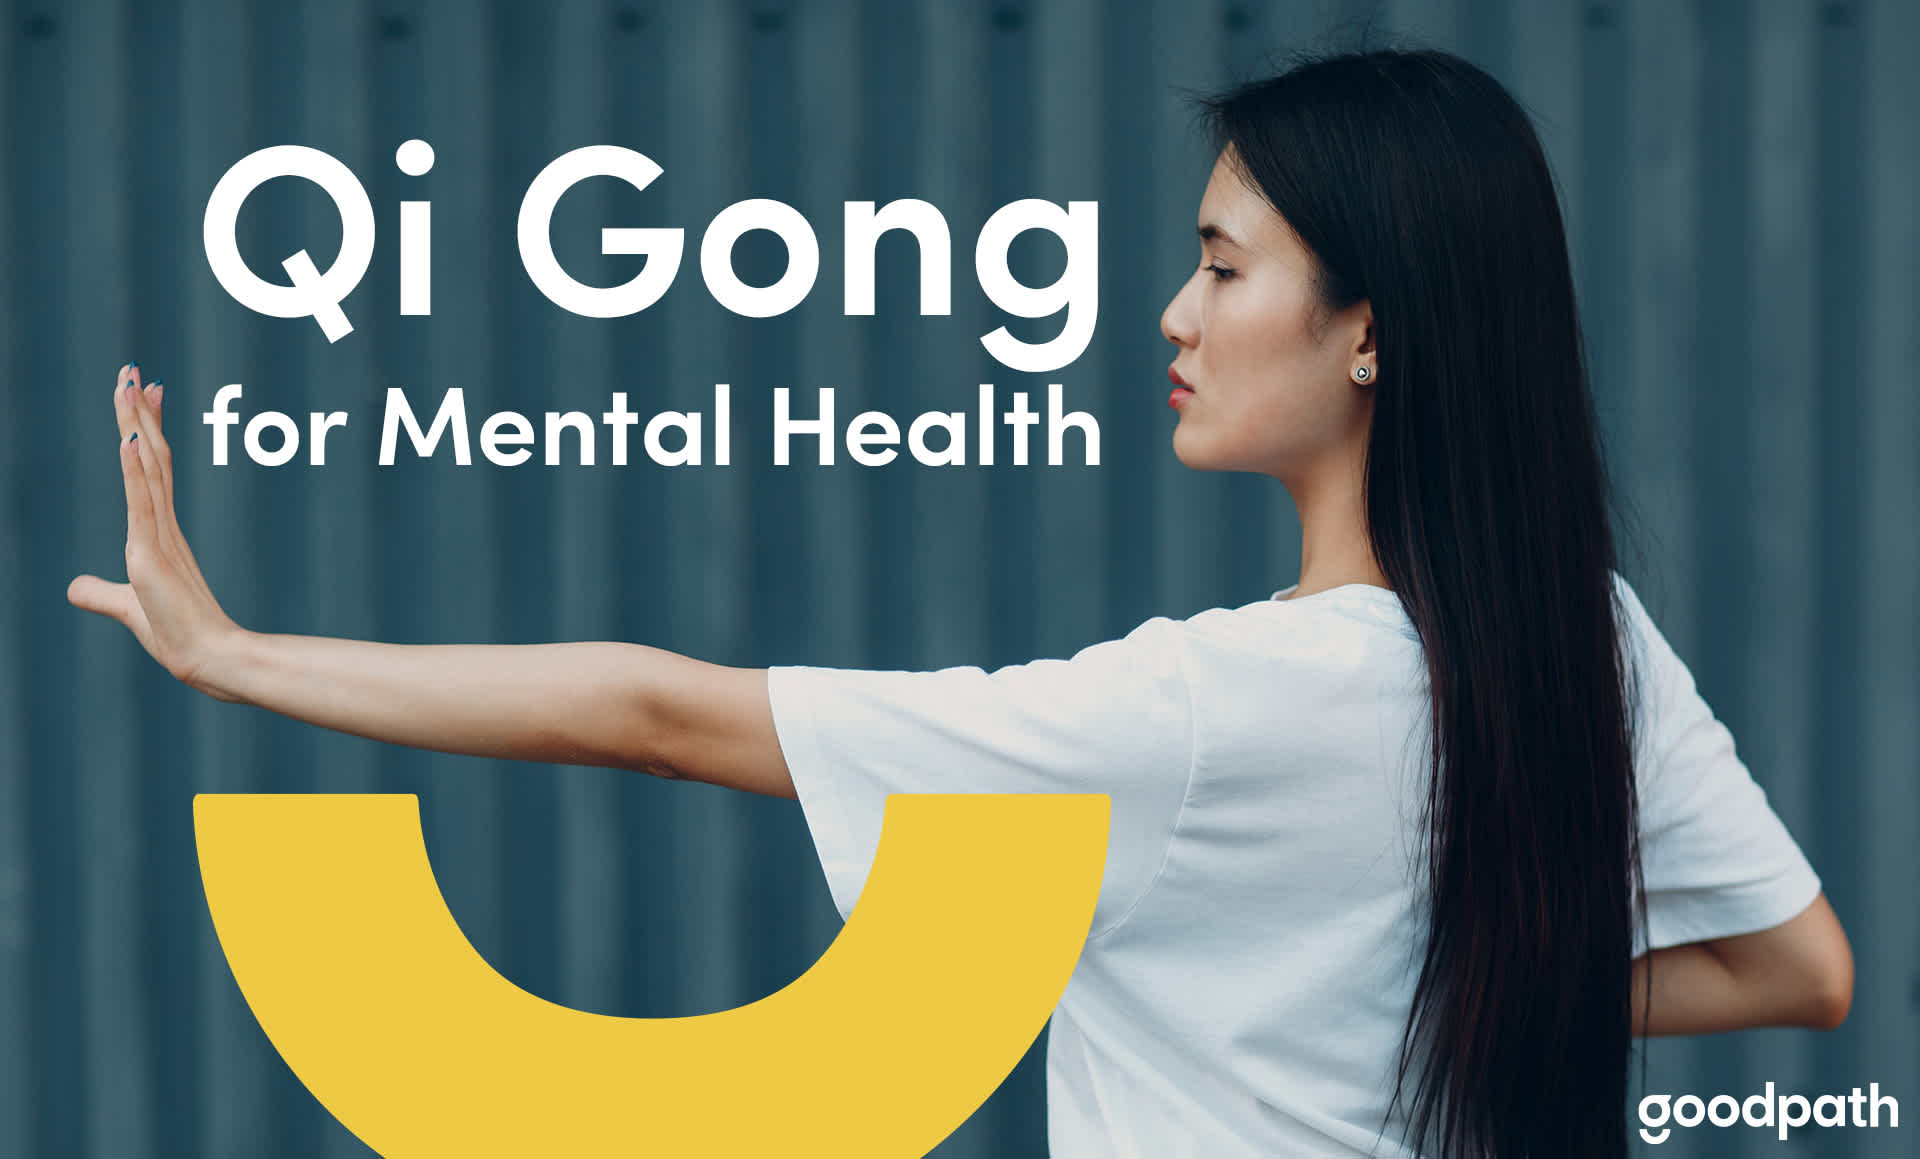 Can Qigong Help Mental Health Problems?